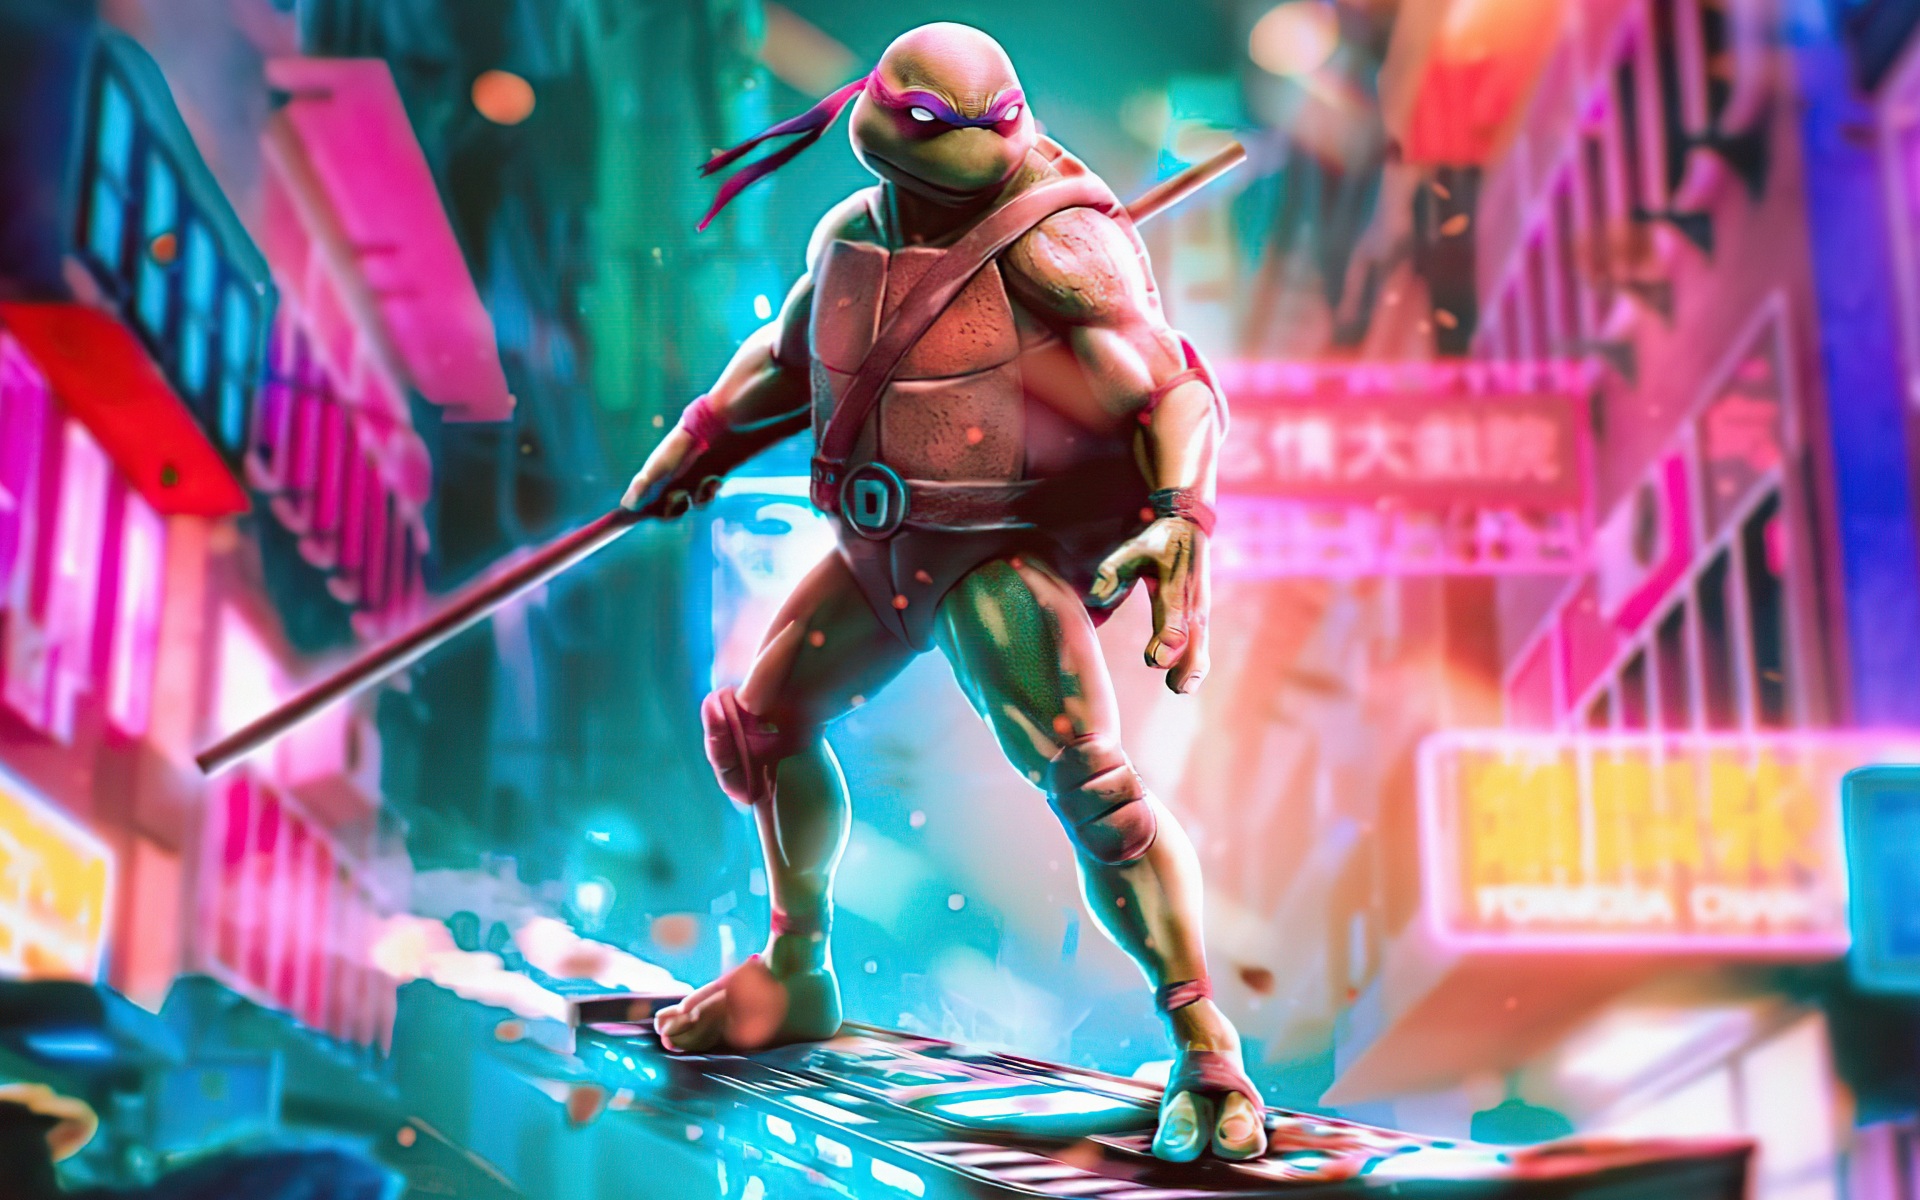 Wallpaper 4k The Cyberpunk Ninja Turtle